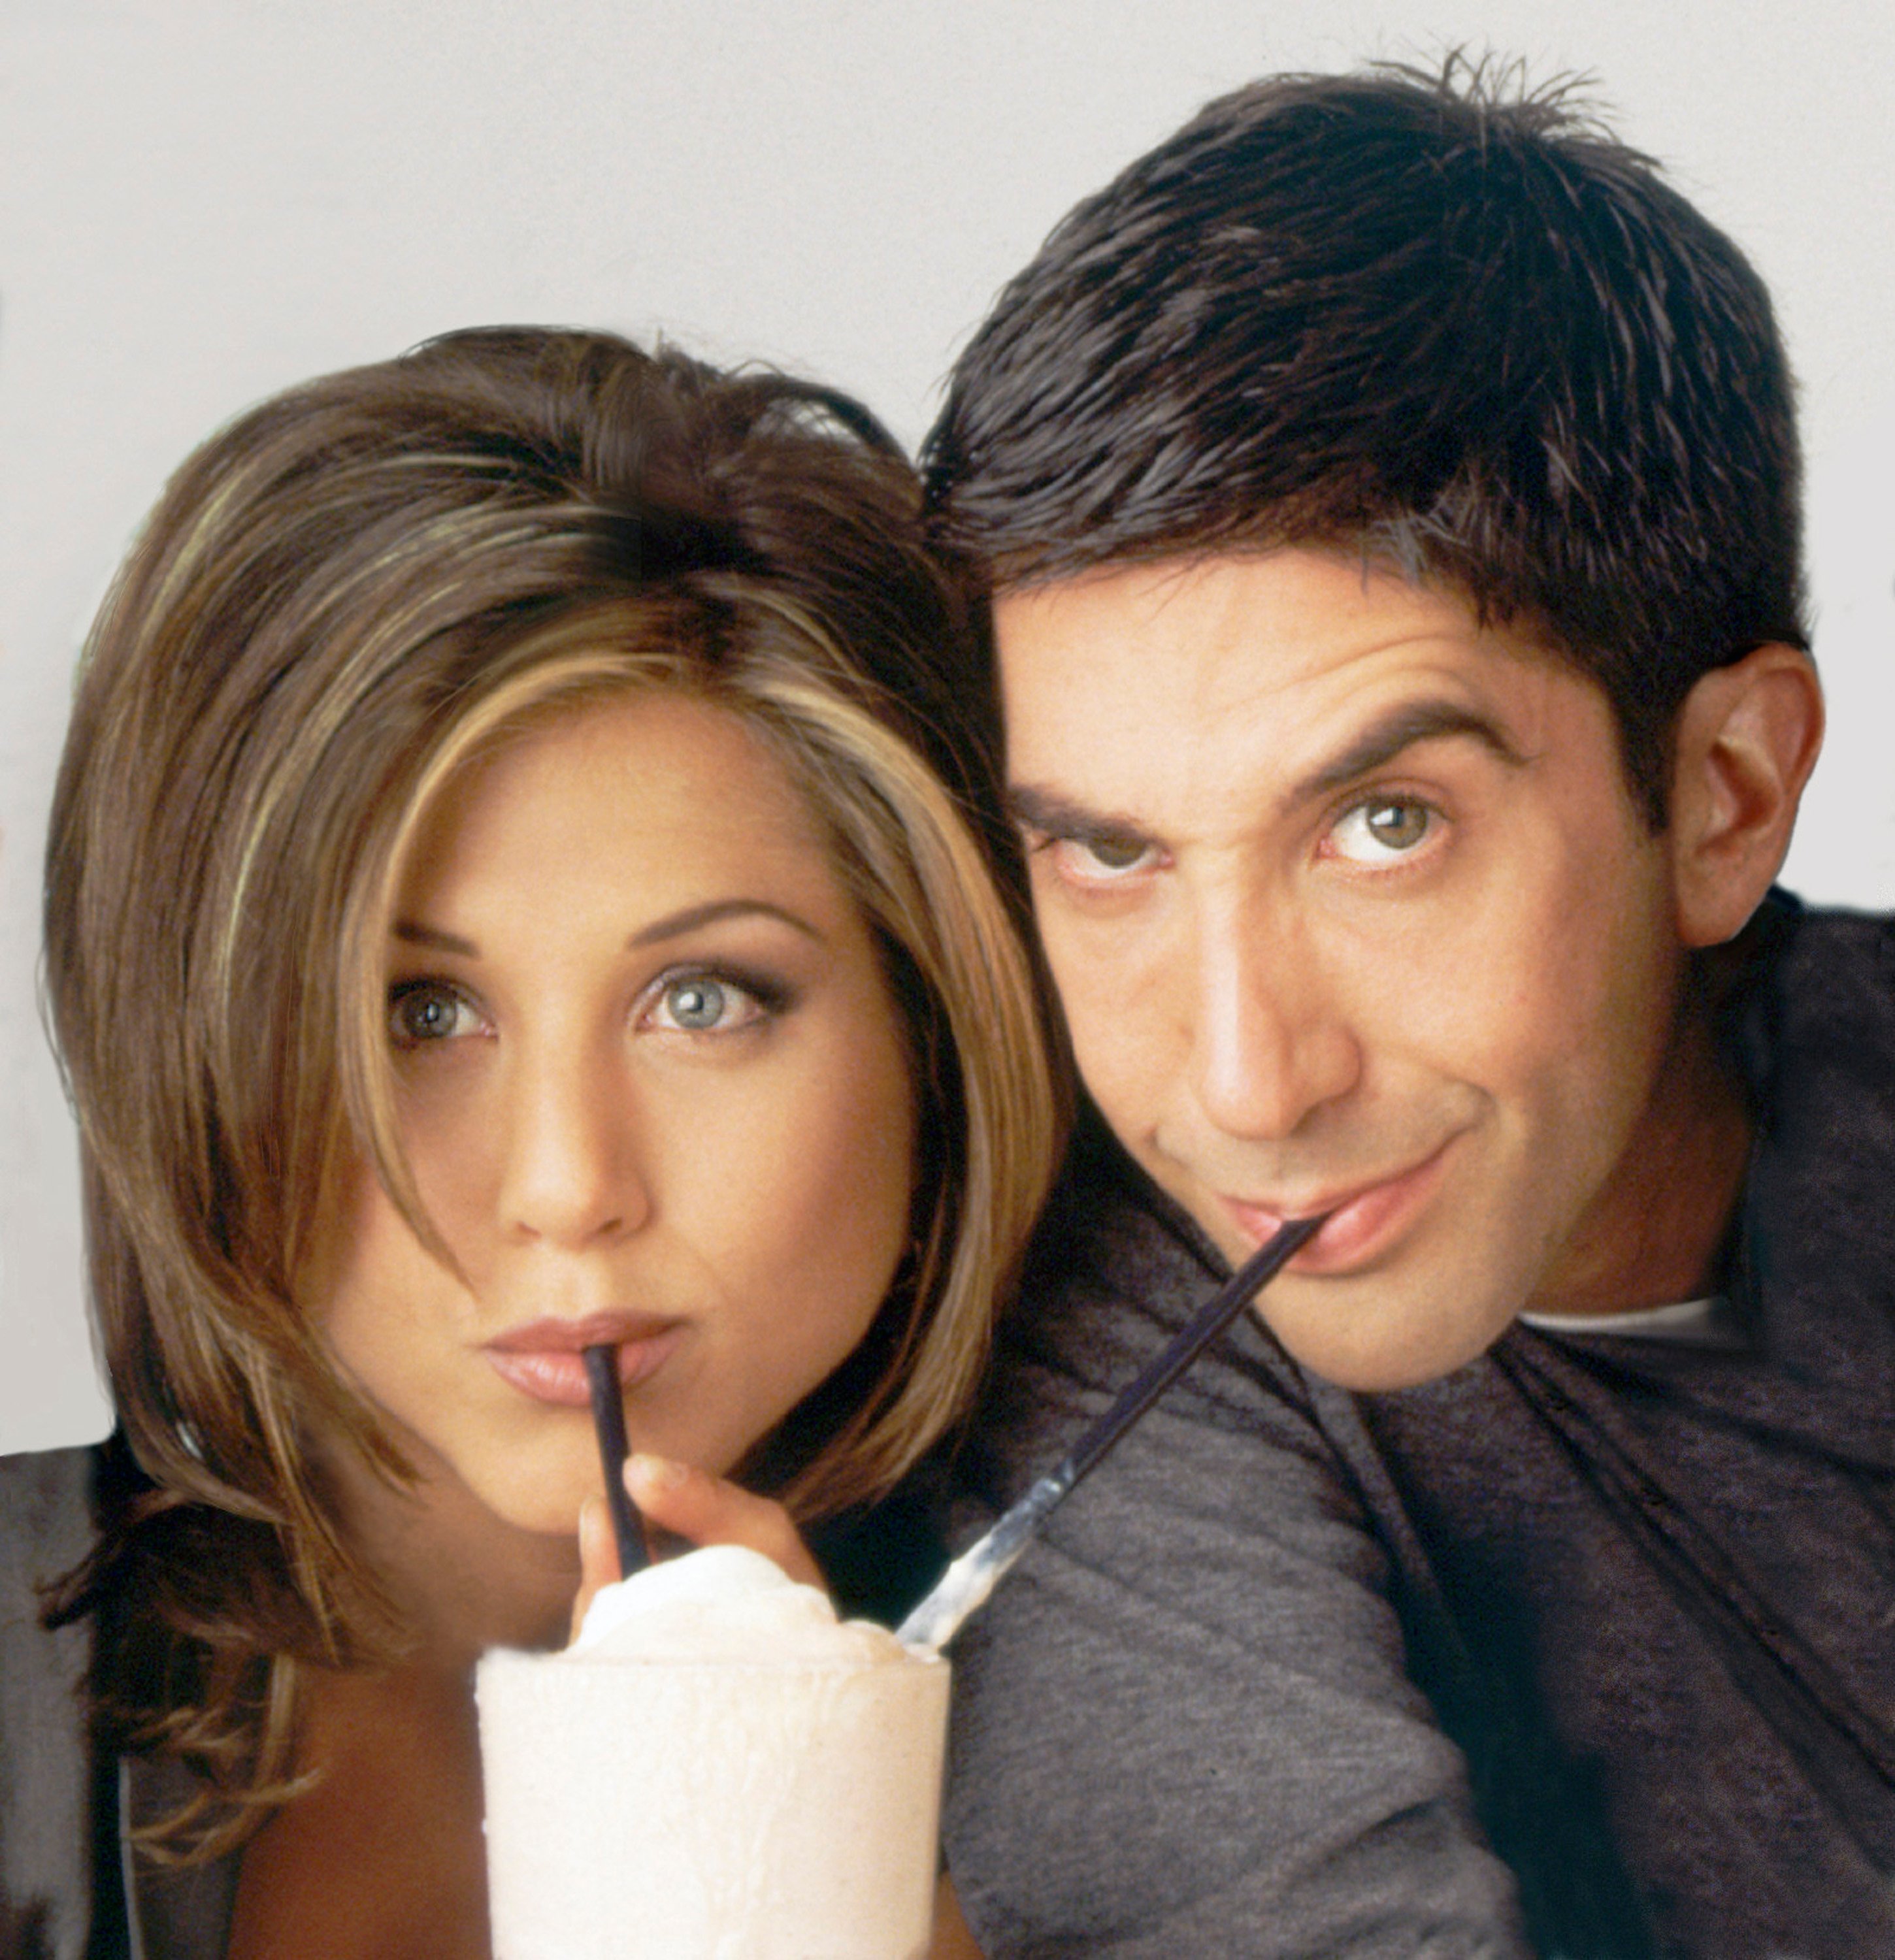 Daivd Schwimmer and Jennifer Aniston share a milkshake